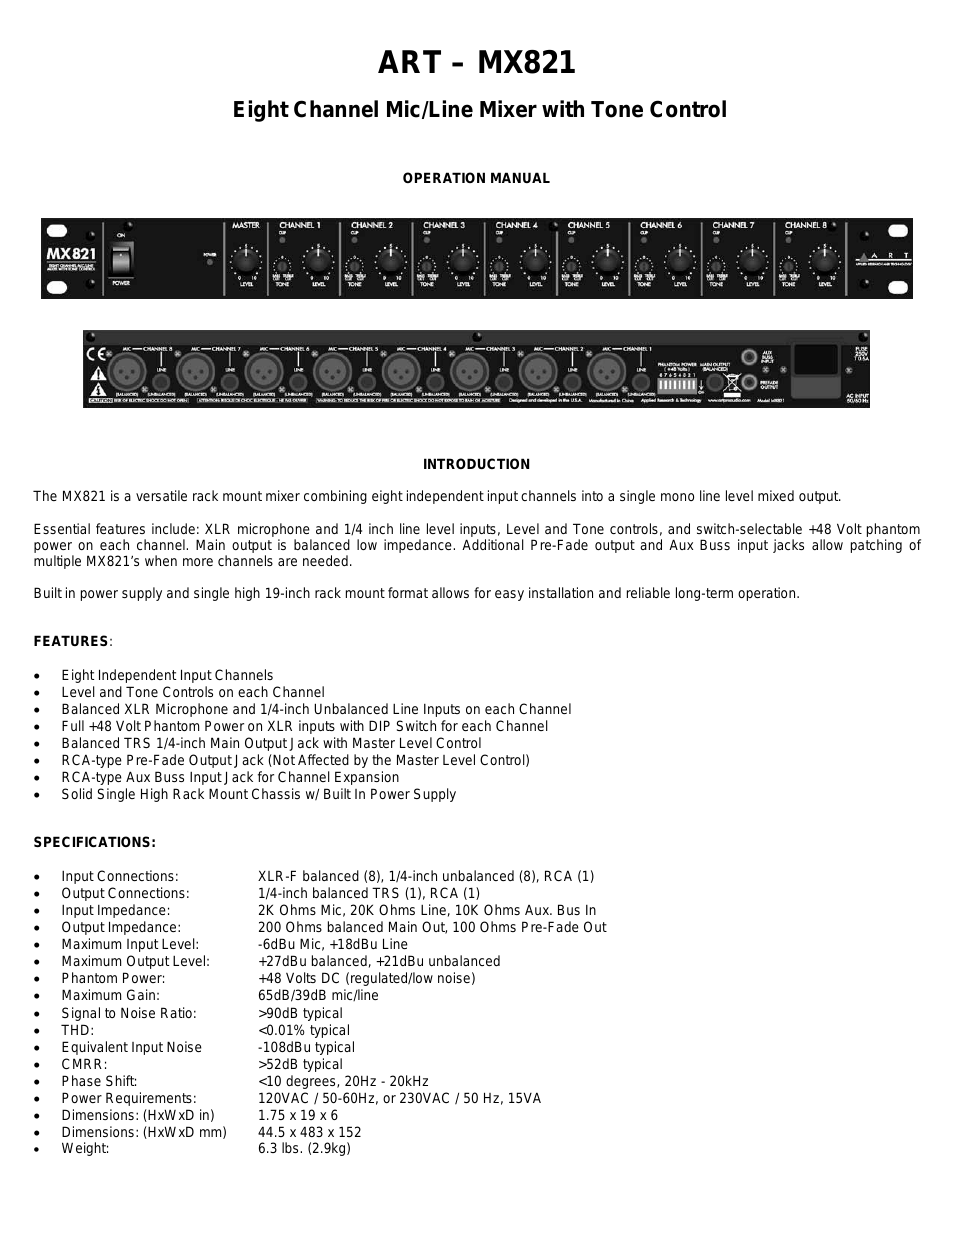 MX821 - 8 Ch (1U) Mic/Line Mixer w/ Tone